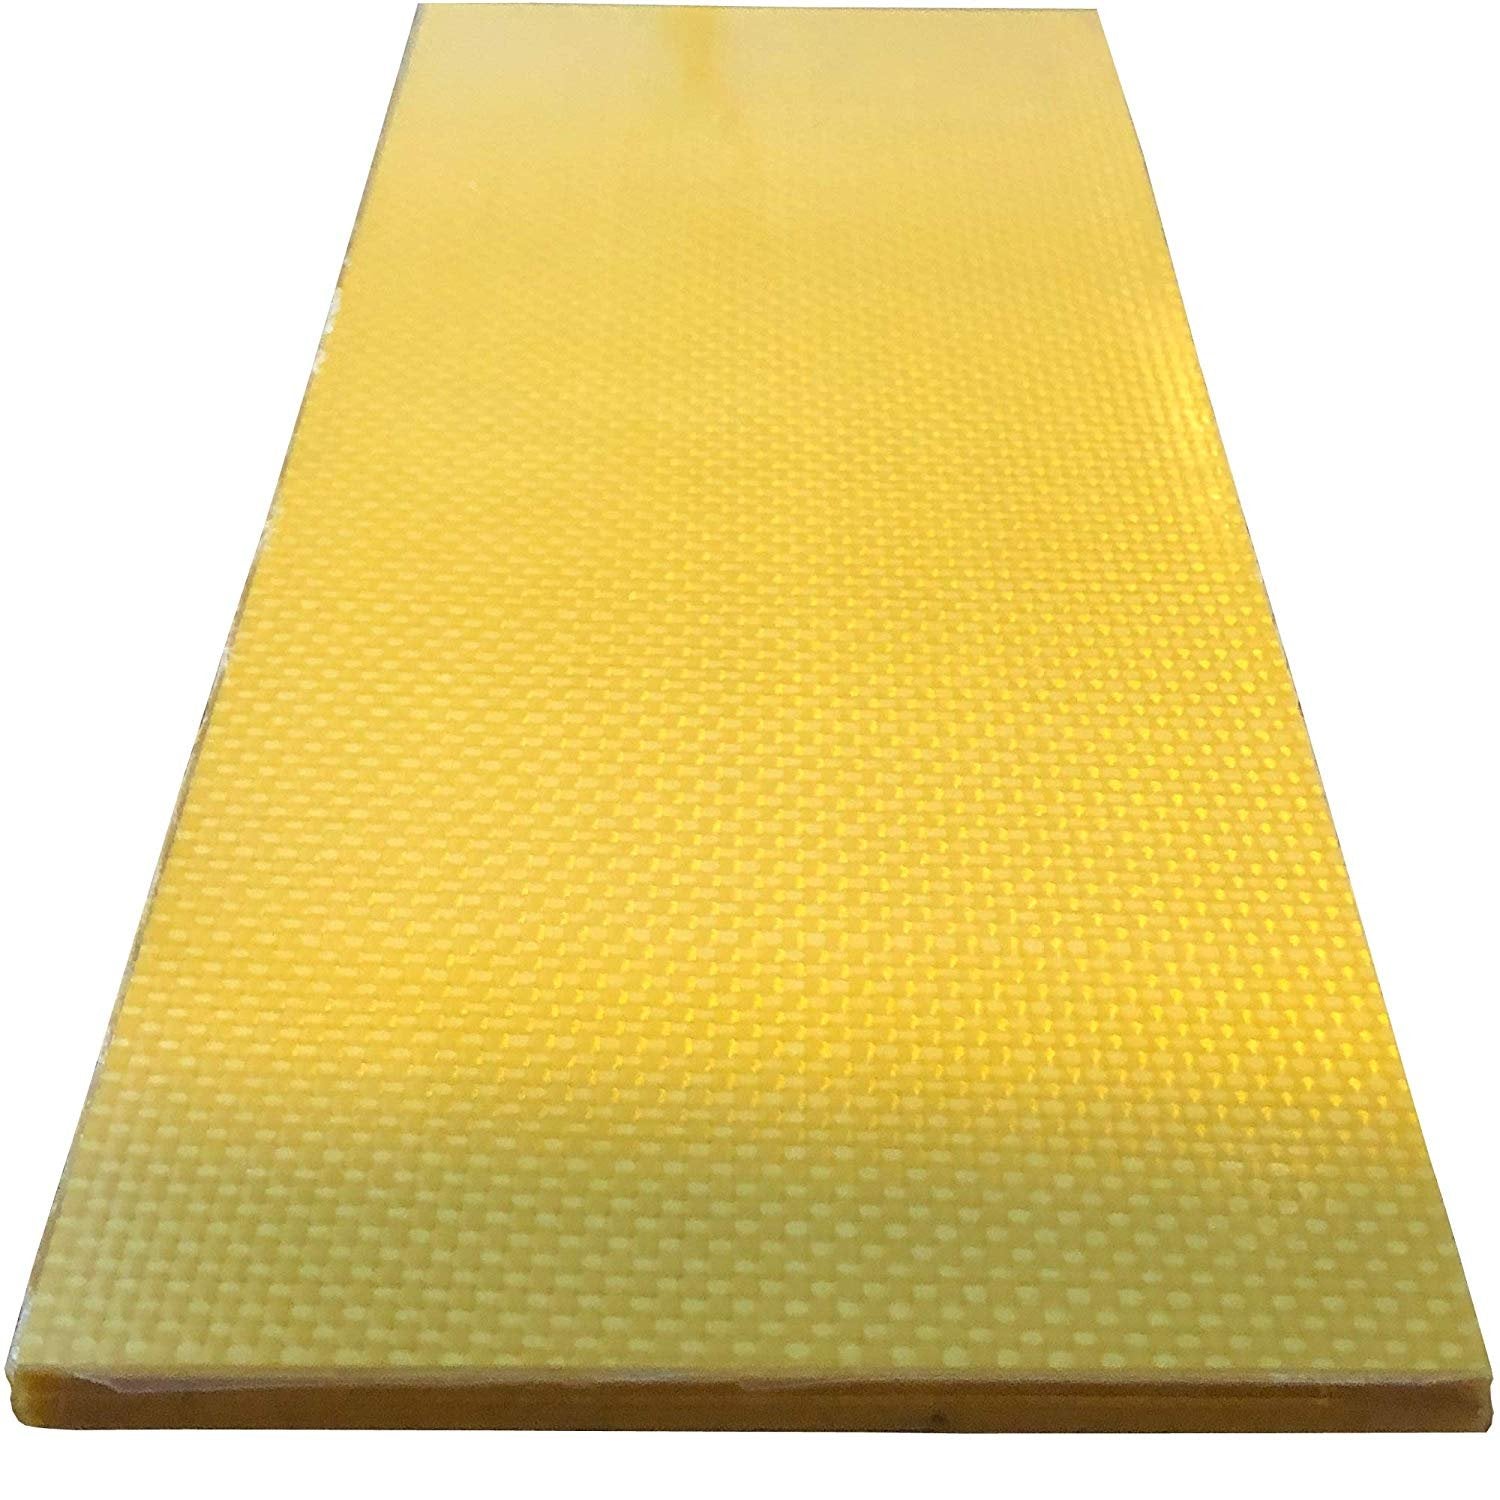 (2) Kevlar Plates - 100mm x 250mm x 6mm Thick - 100% Kevlar Plain Weave  -High Gloss Surface (1) Plate